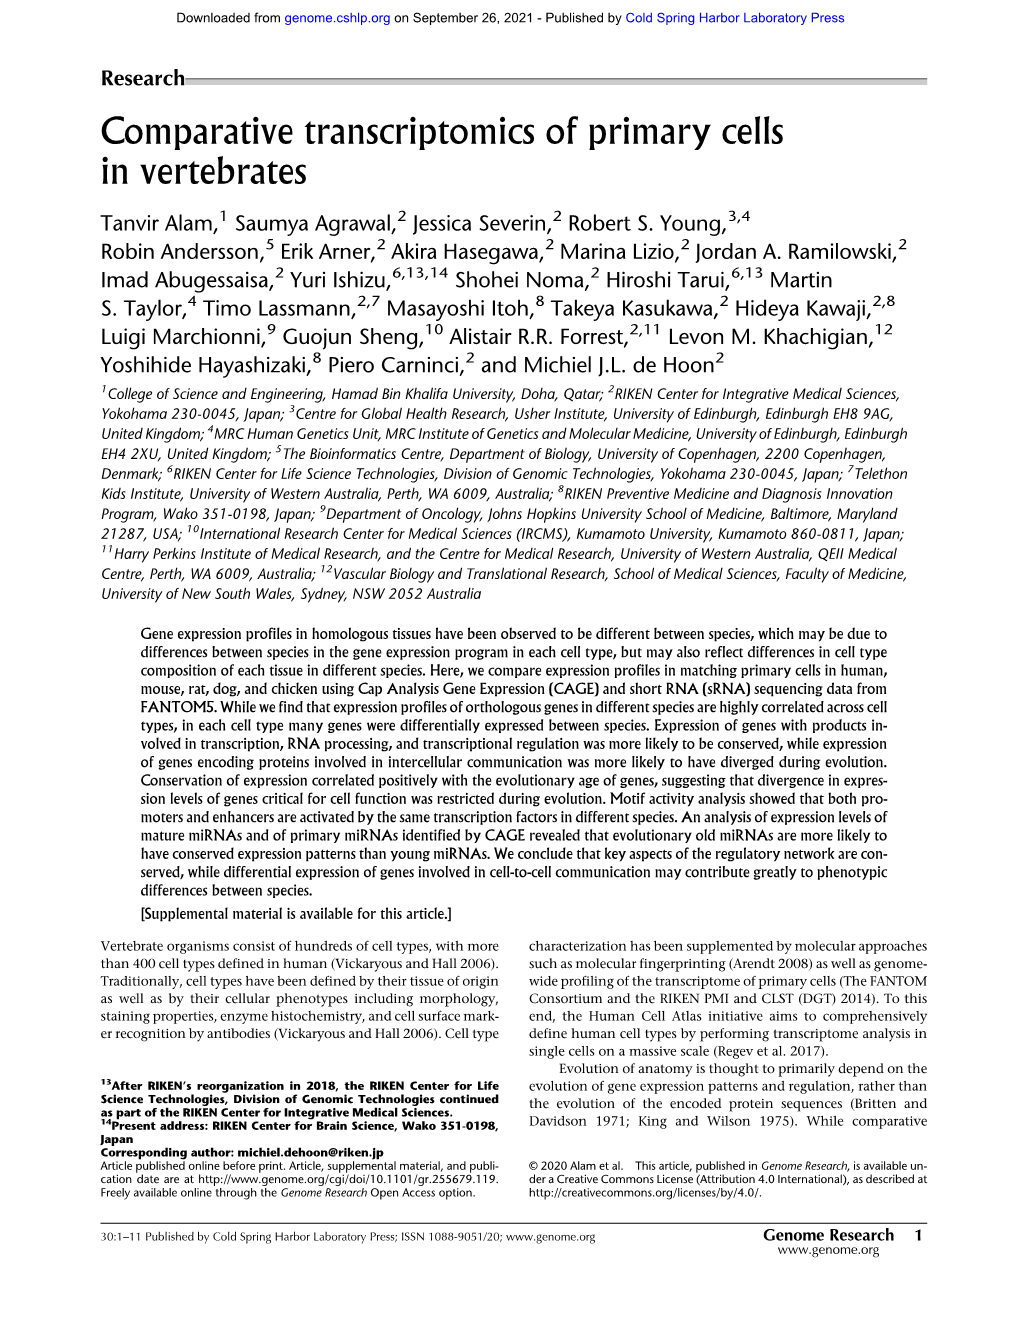 Comparative Transcriptomics of Primary Cells in Vertebrates